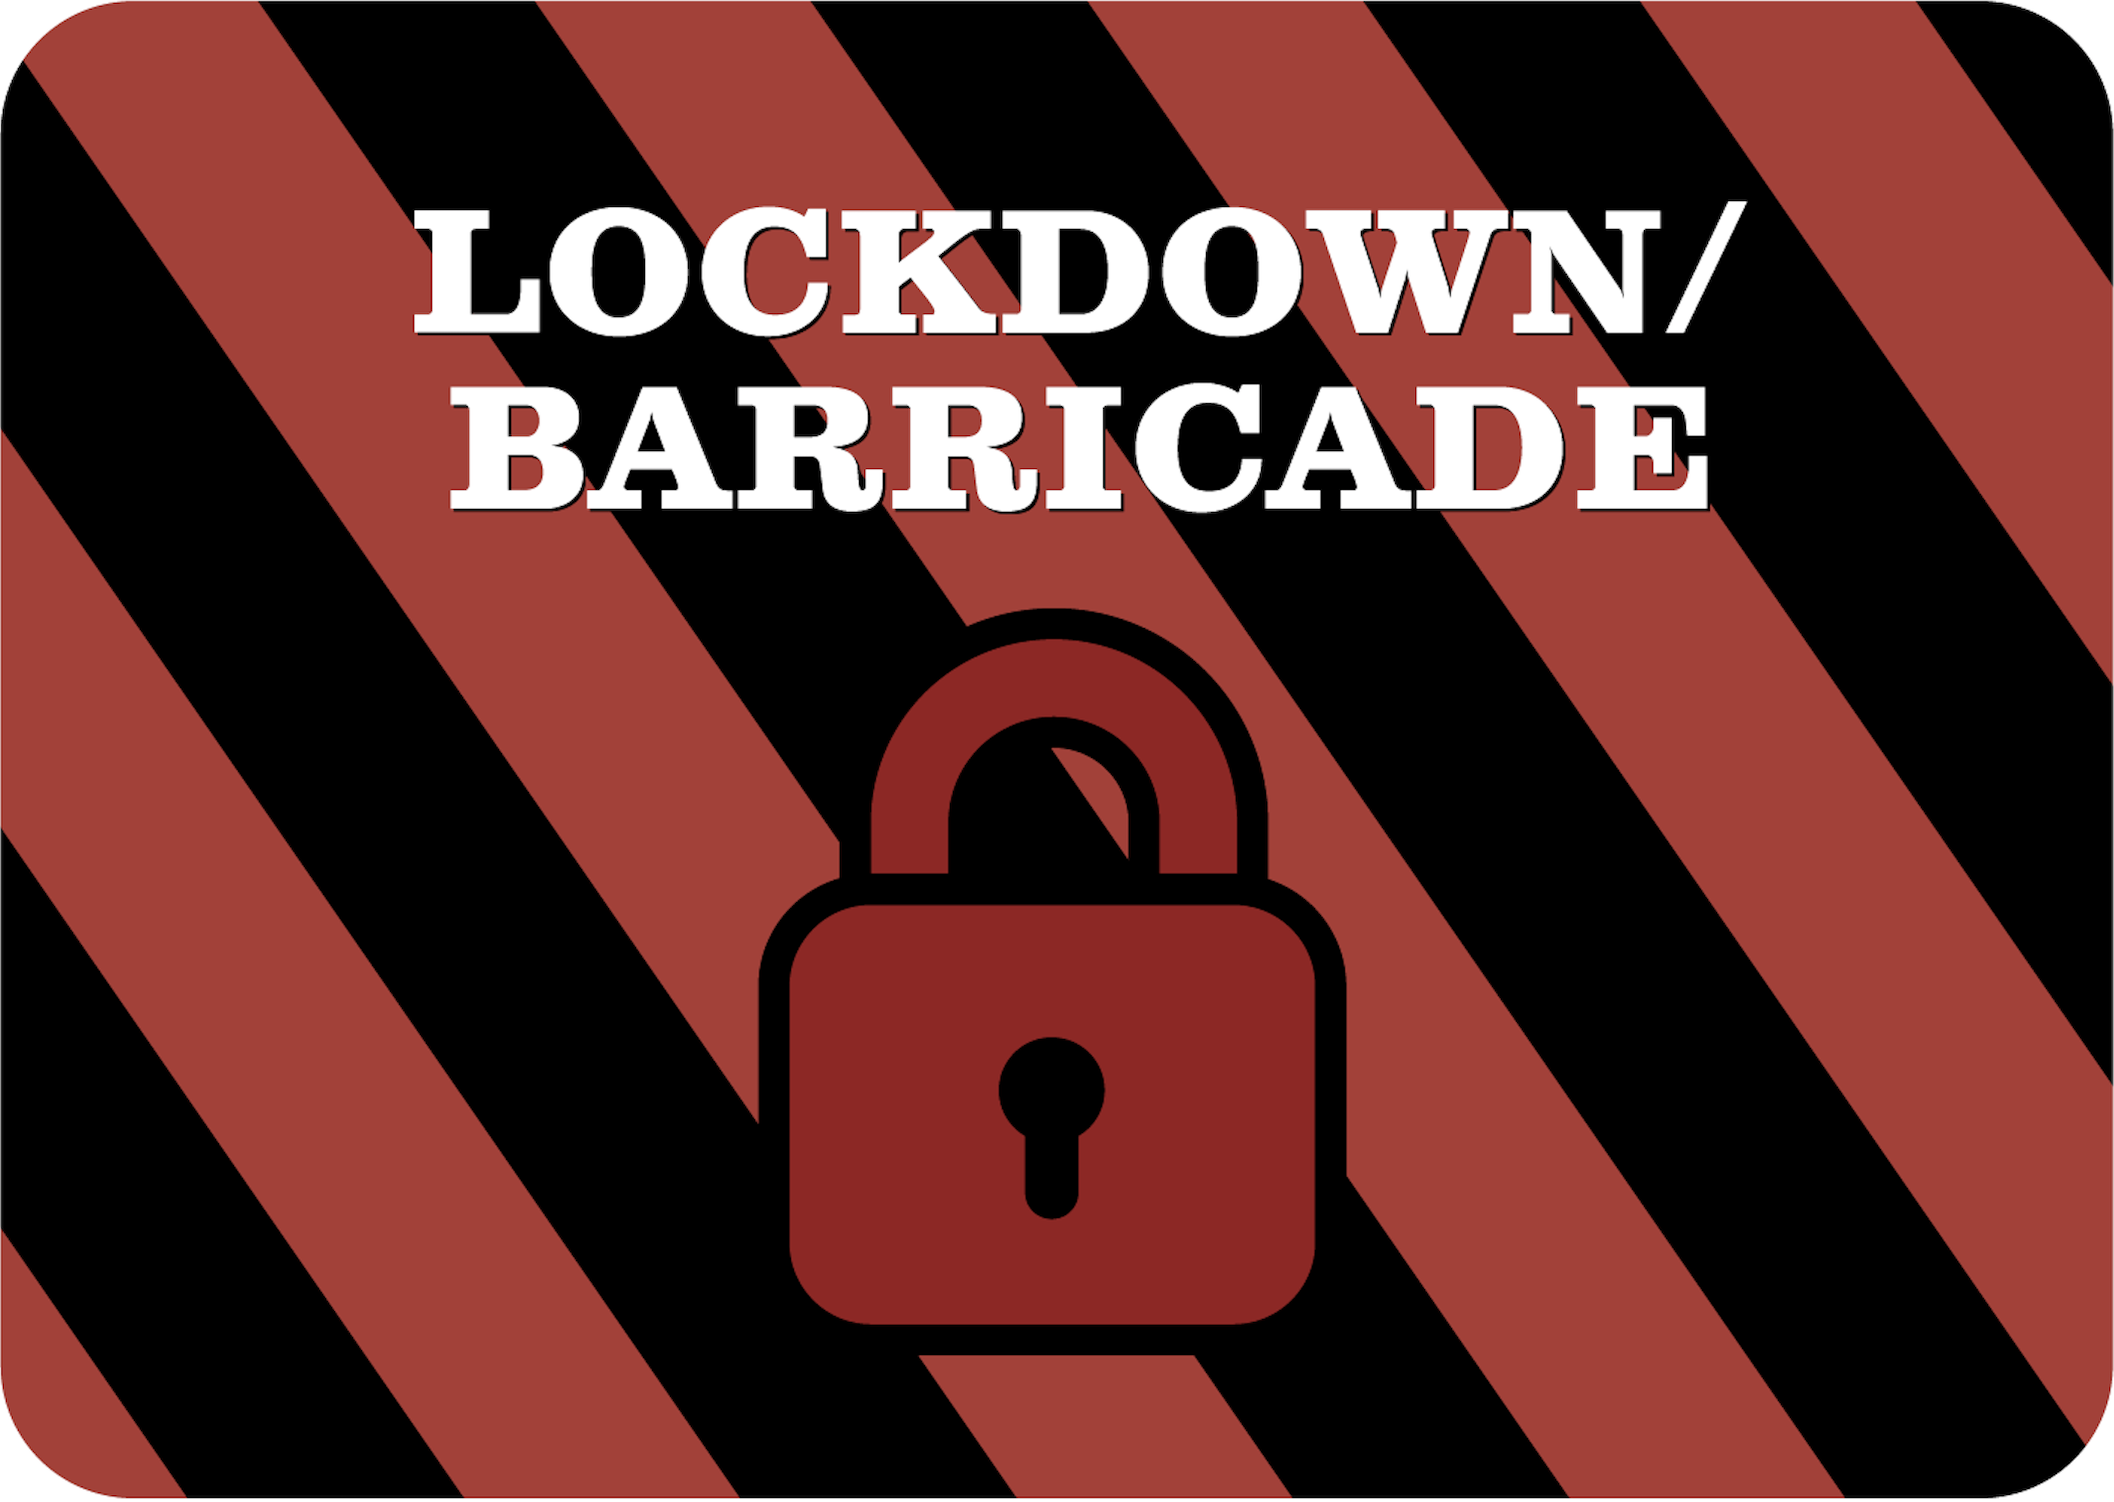 Lockdown/Barricade